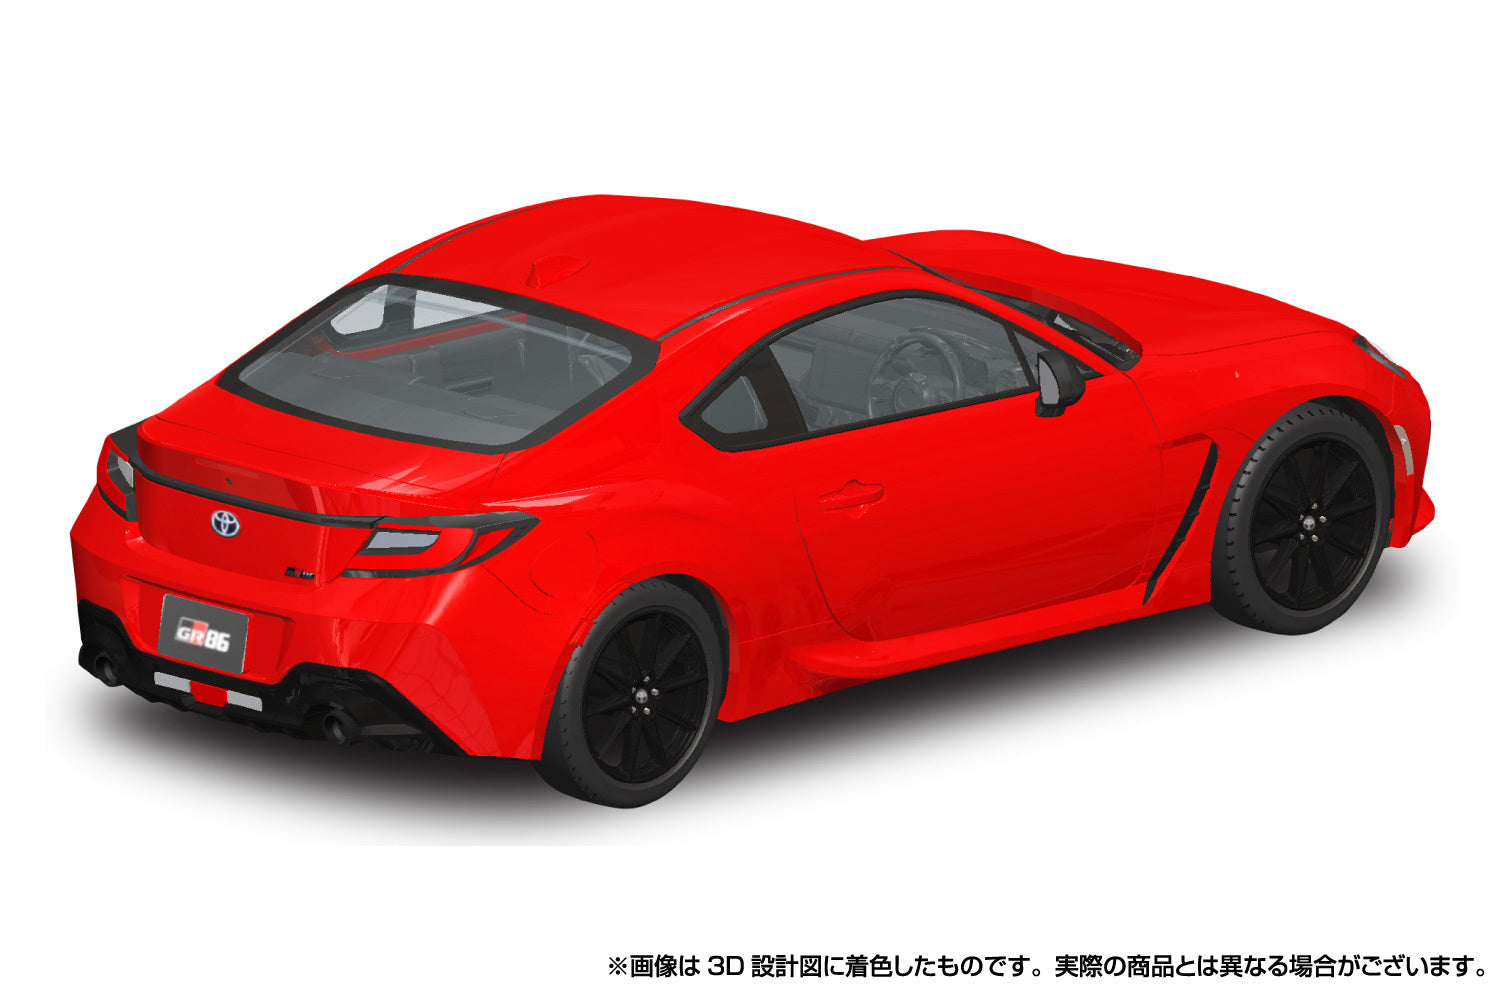 Aoshima - The Snap Kit - Toyota GR-86 (Spark Red) Model Kit (1/32 Scale) - Marvelous Toys